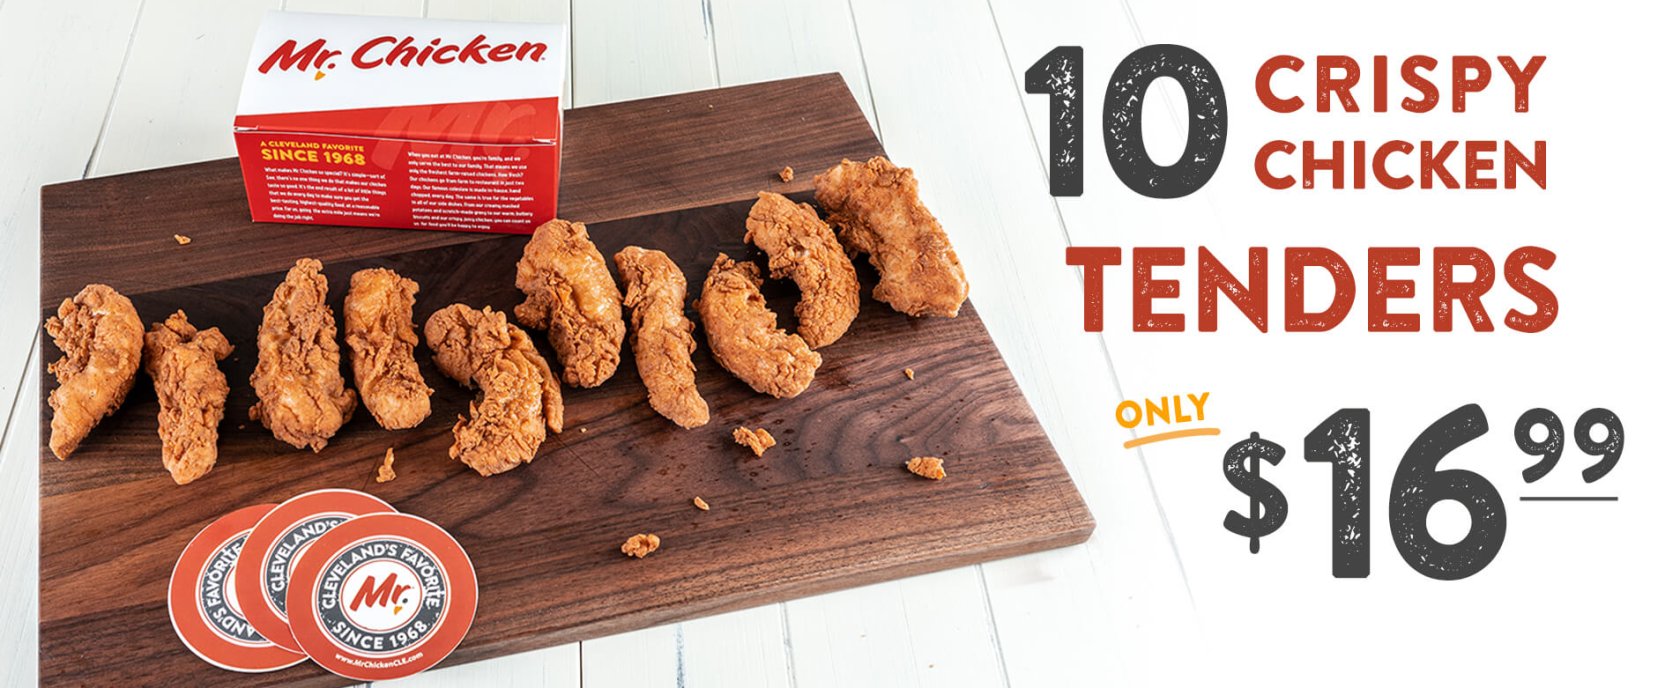 10 pieces of chicken tenders